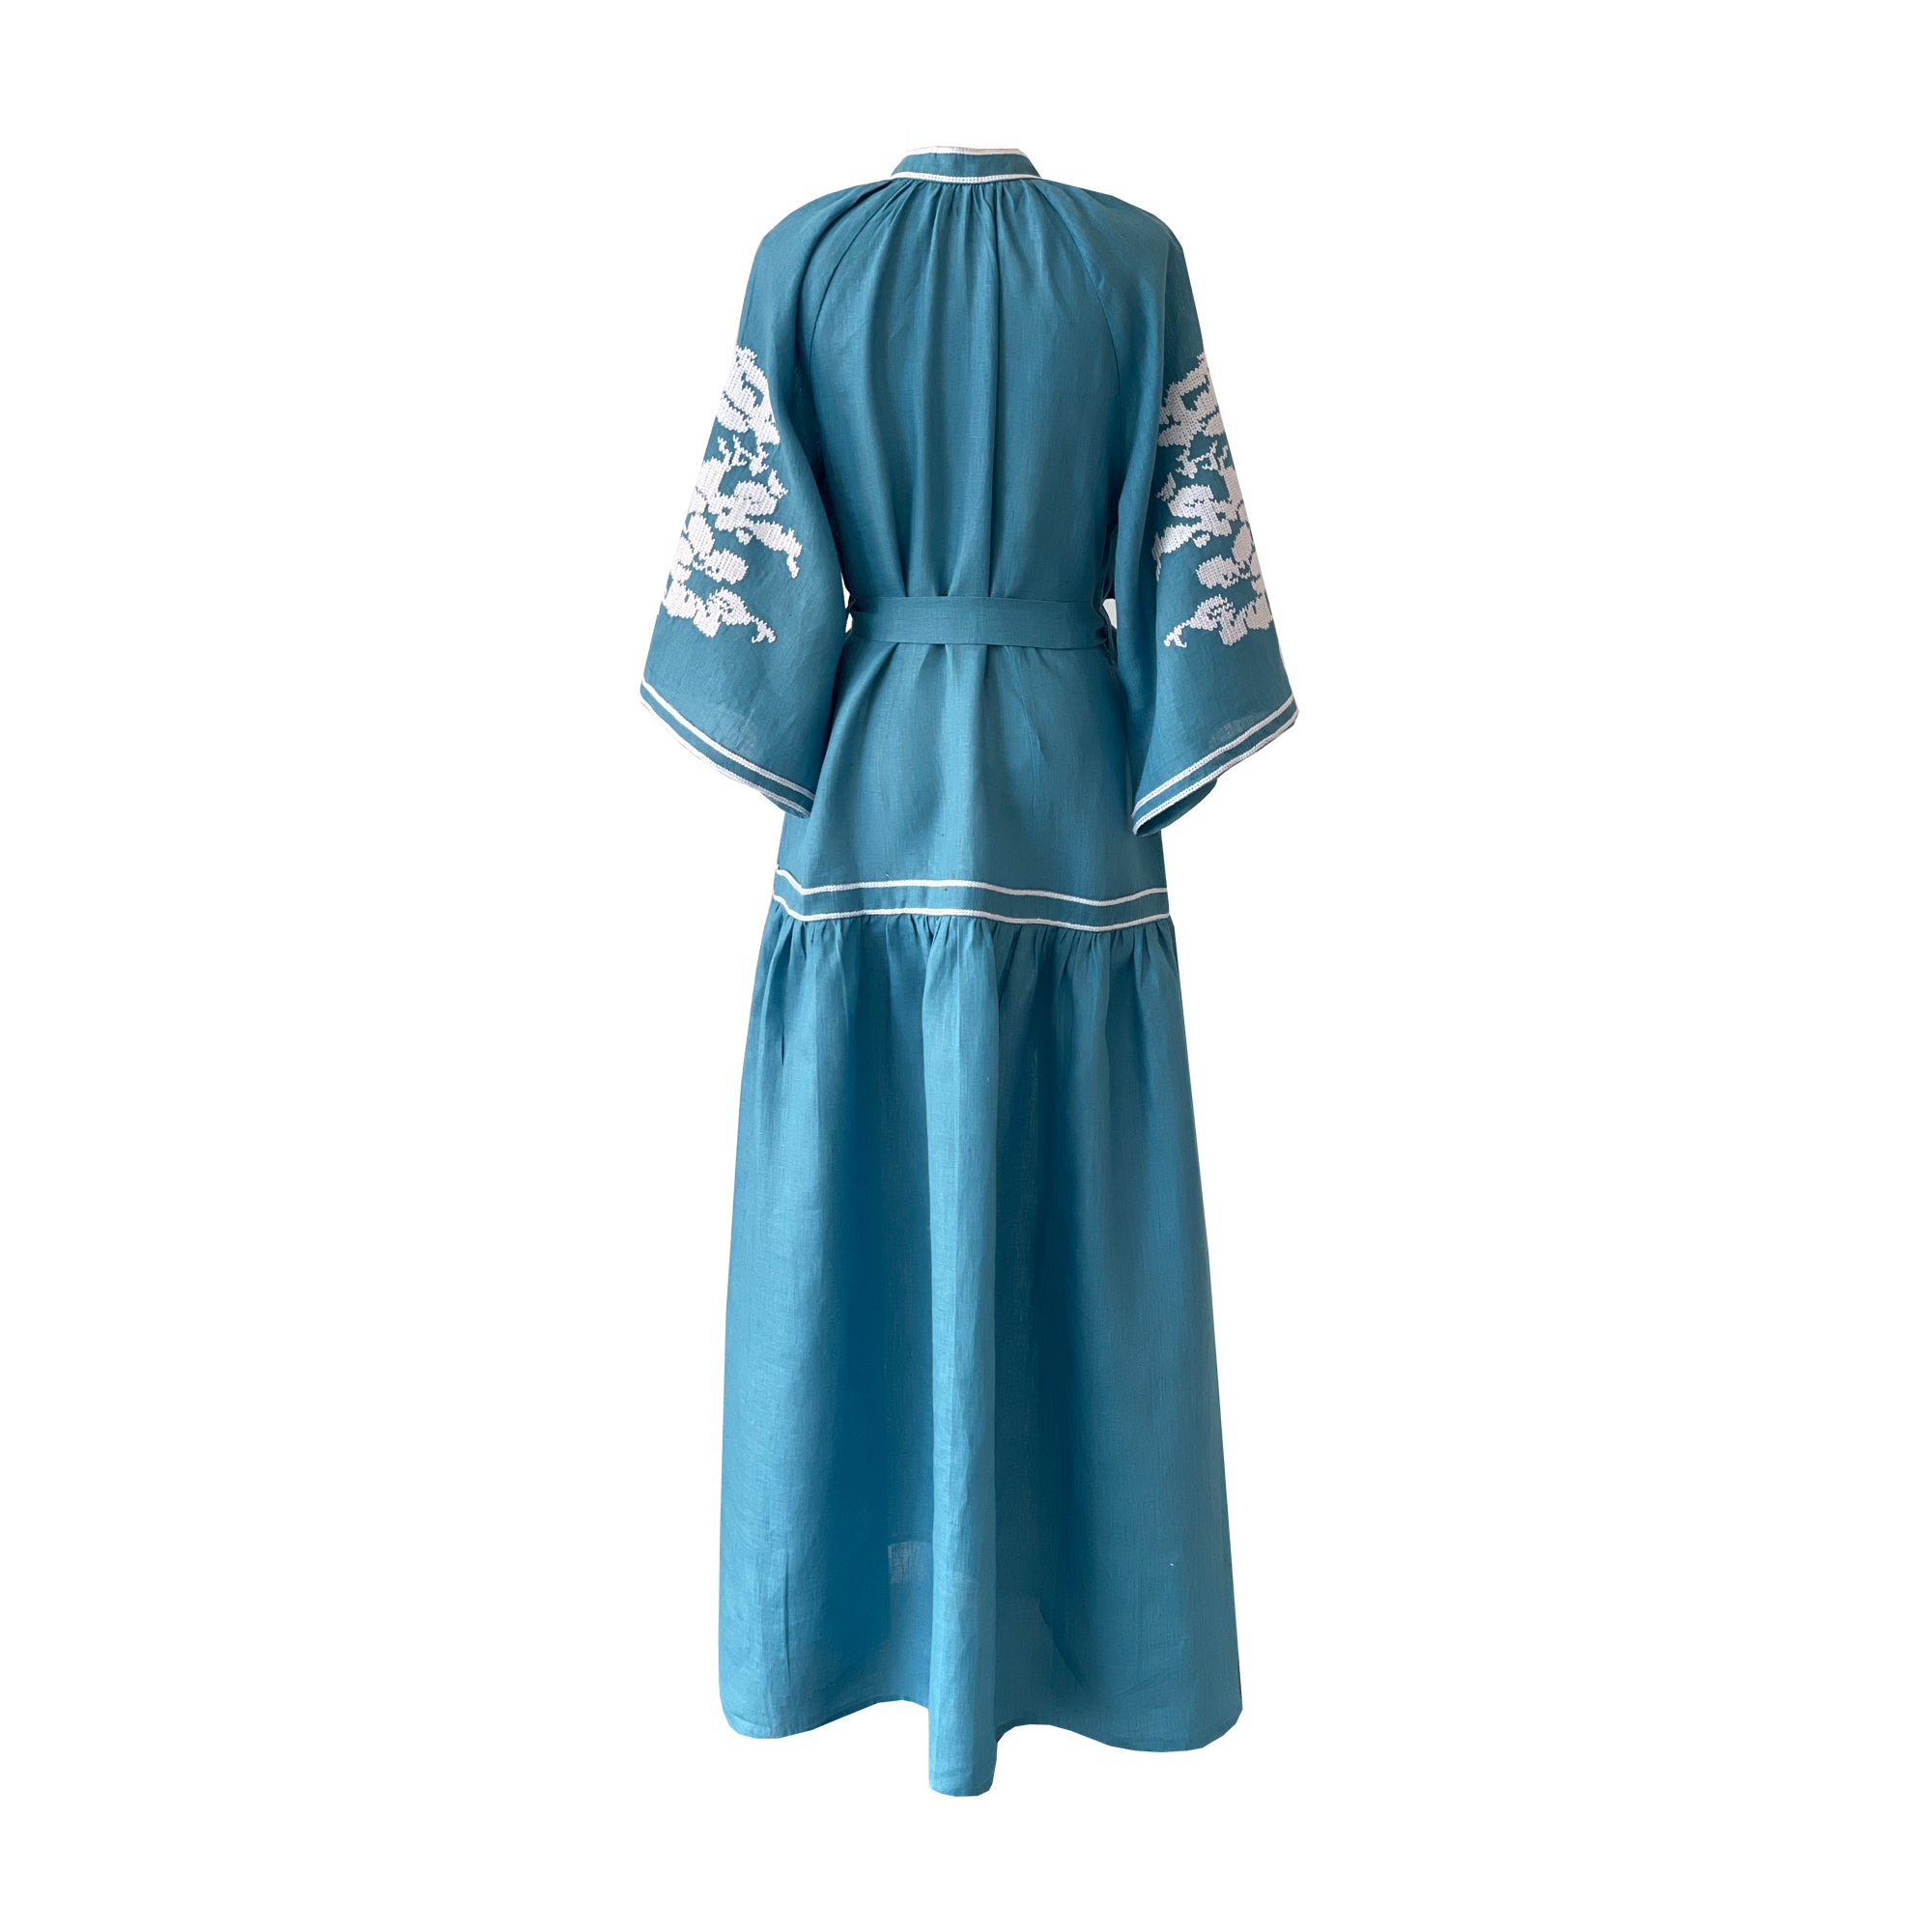 Turquoise Swan Dress